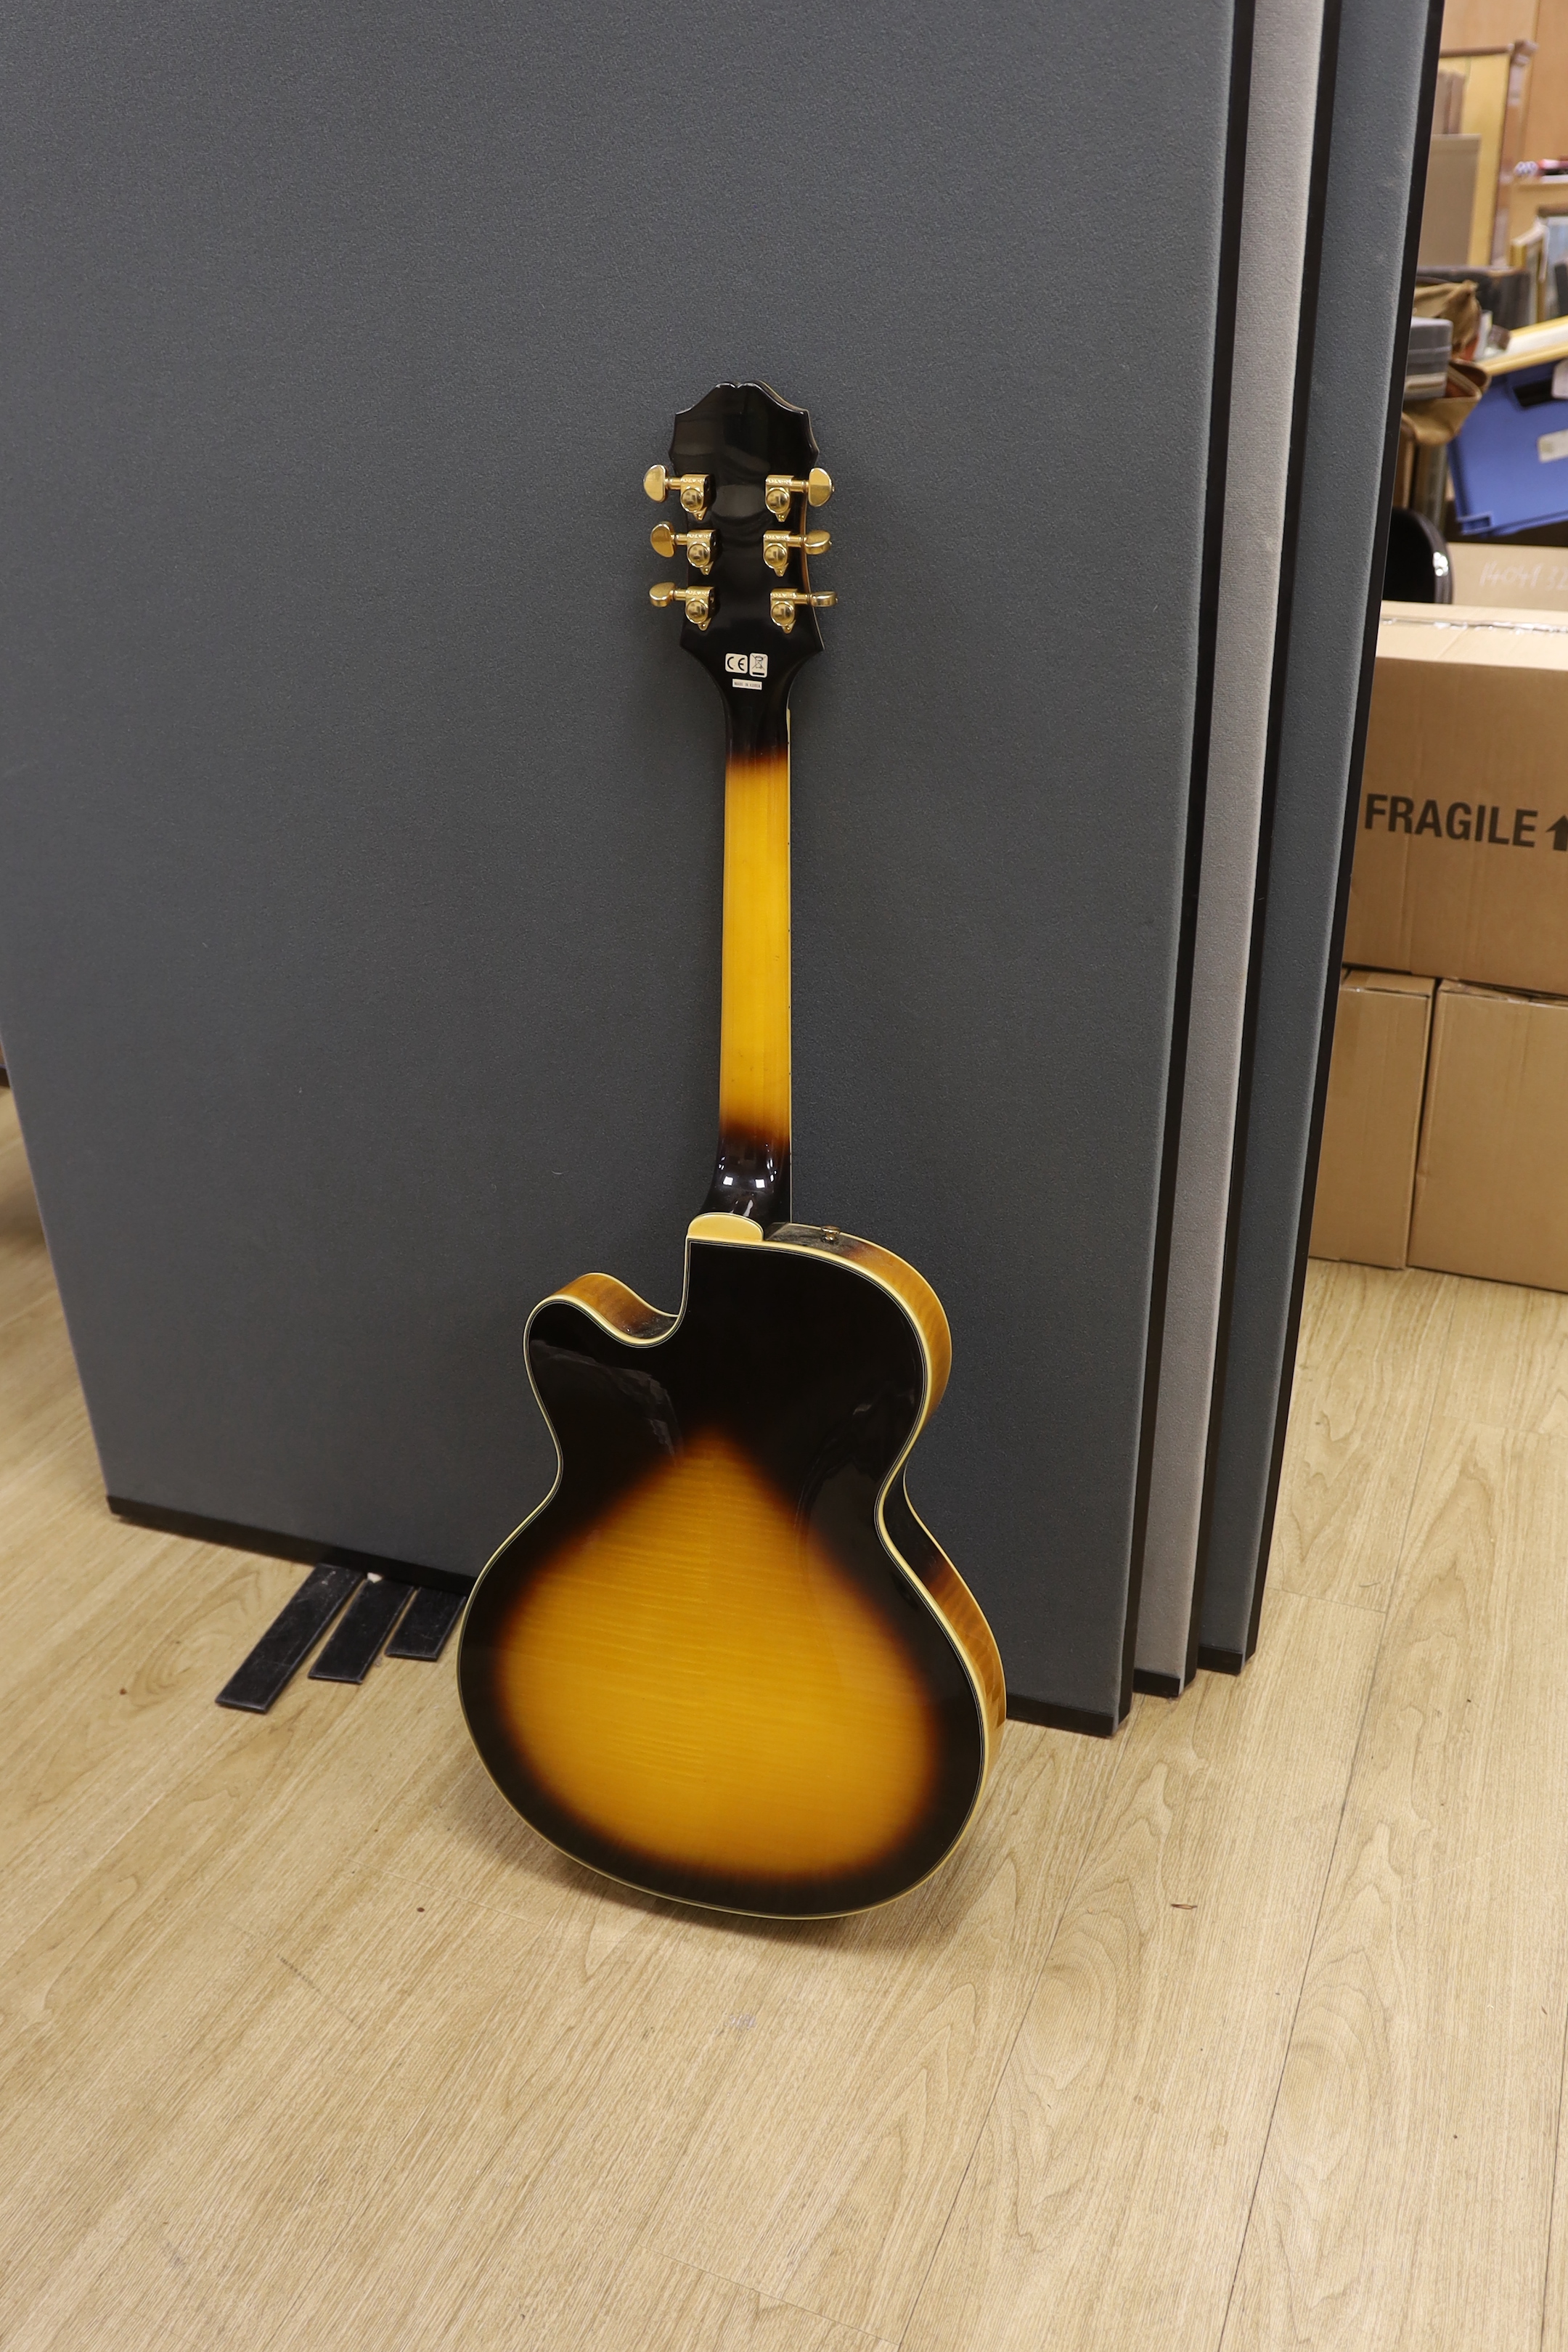 An Epiphone Joe Pass signature Emperor II guitar in hard case